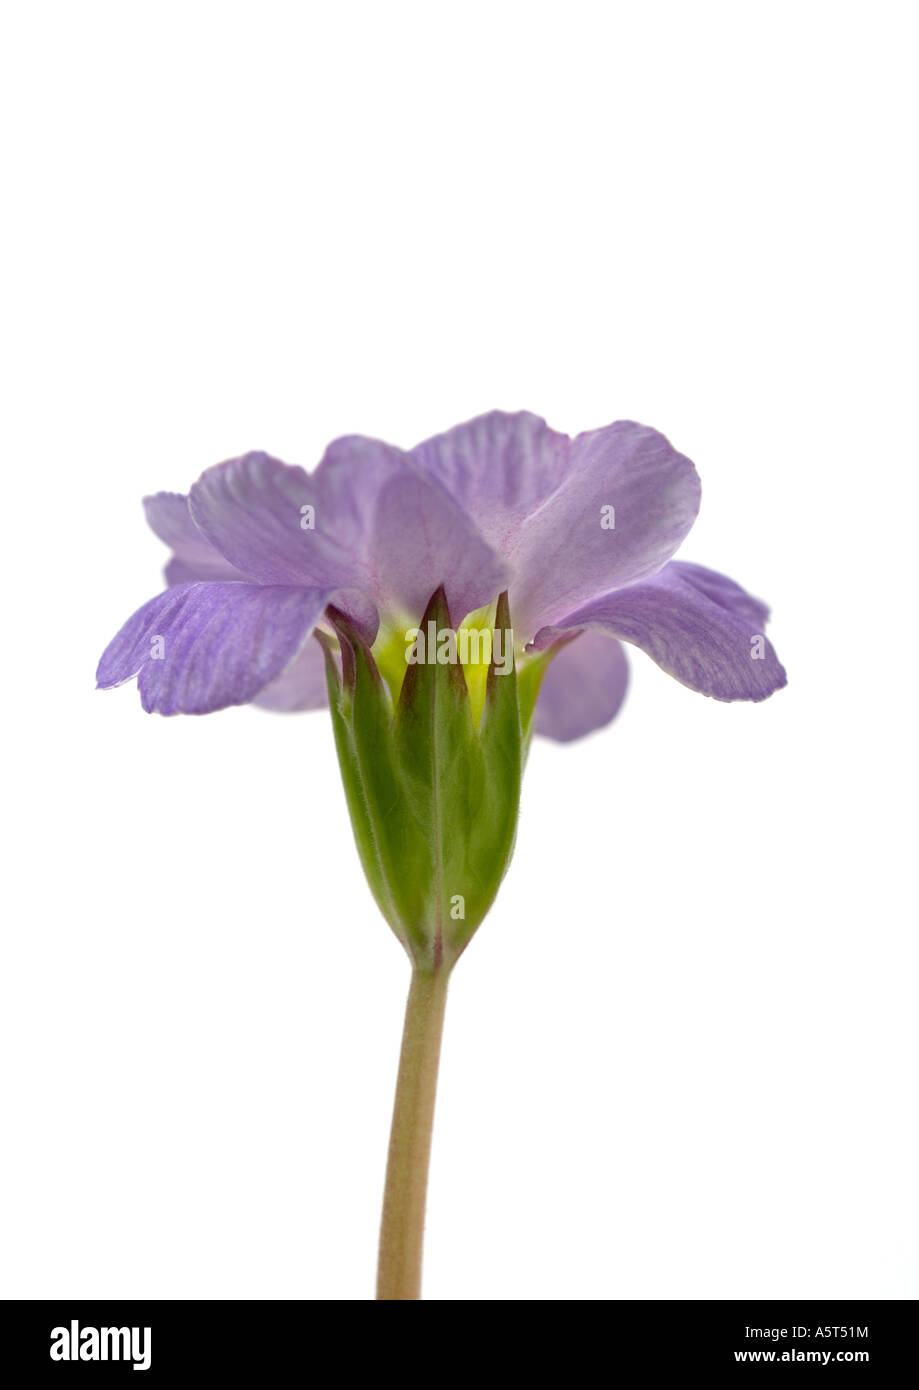 Primrose flower, close-up Stock Photo